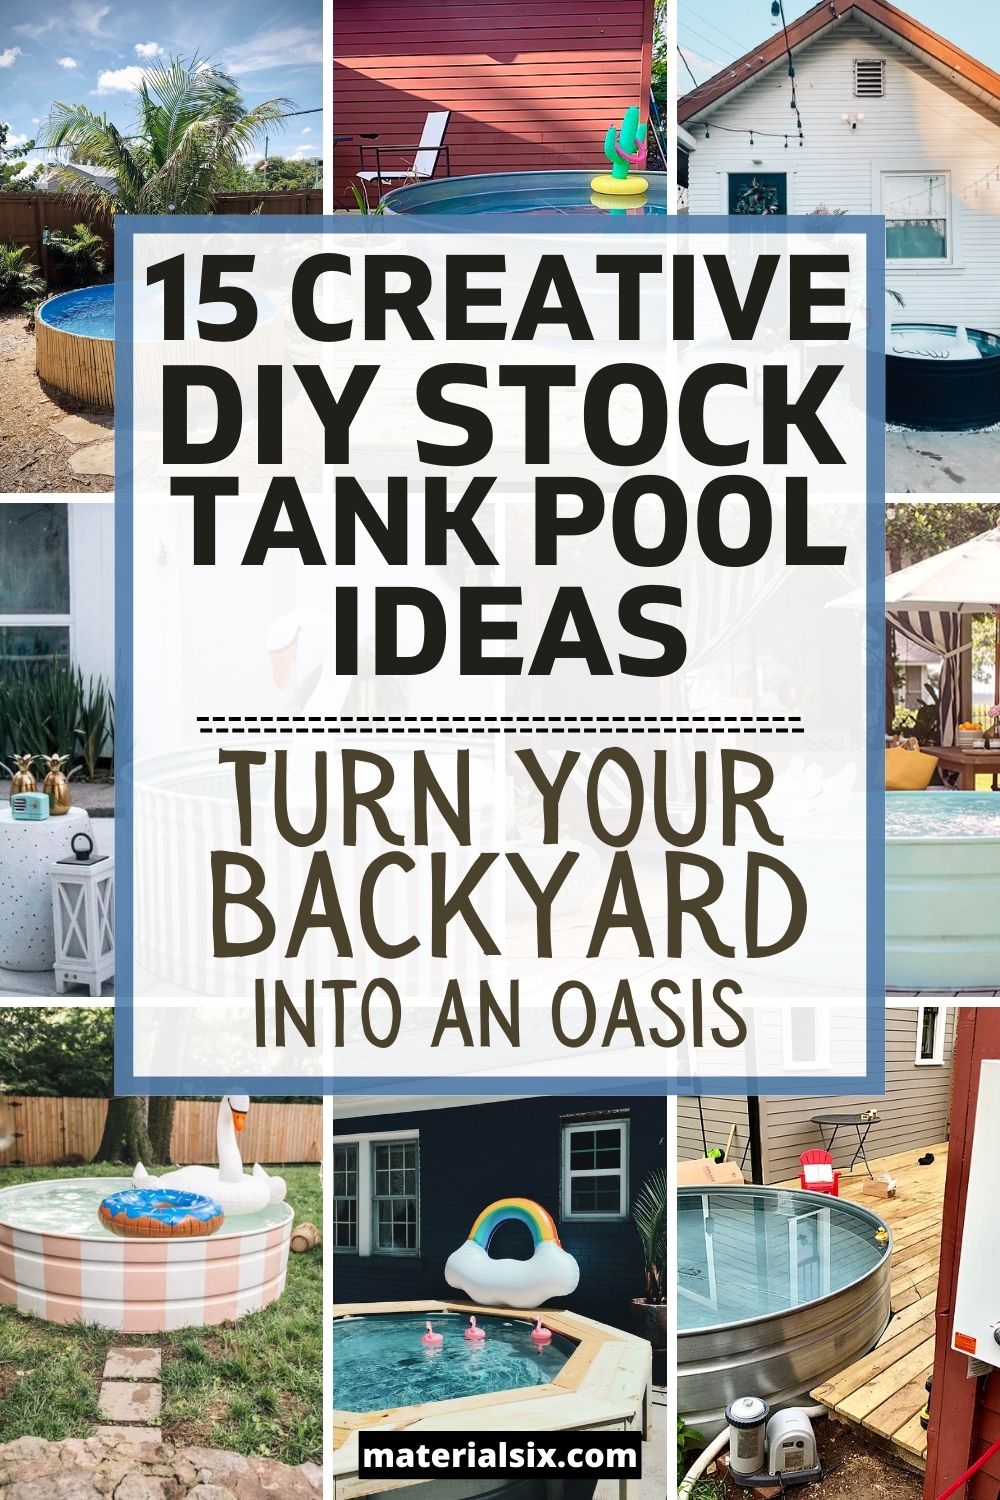 15 Backyard Oasis Ideas with DIY Stock Tank Pools